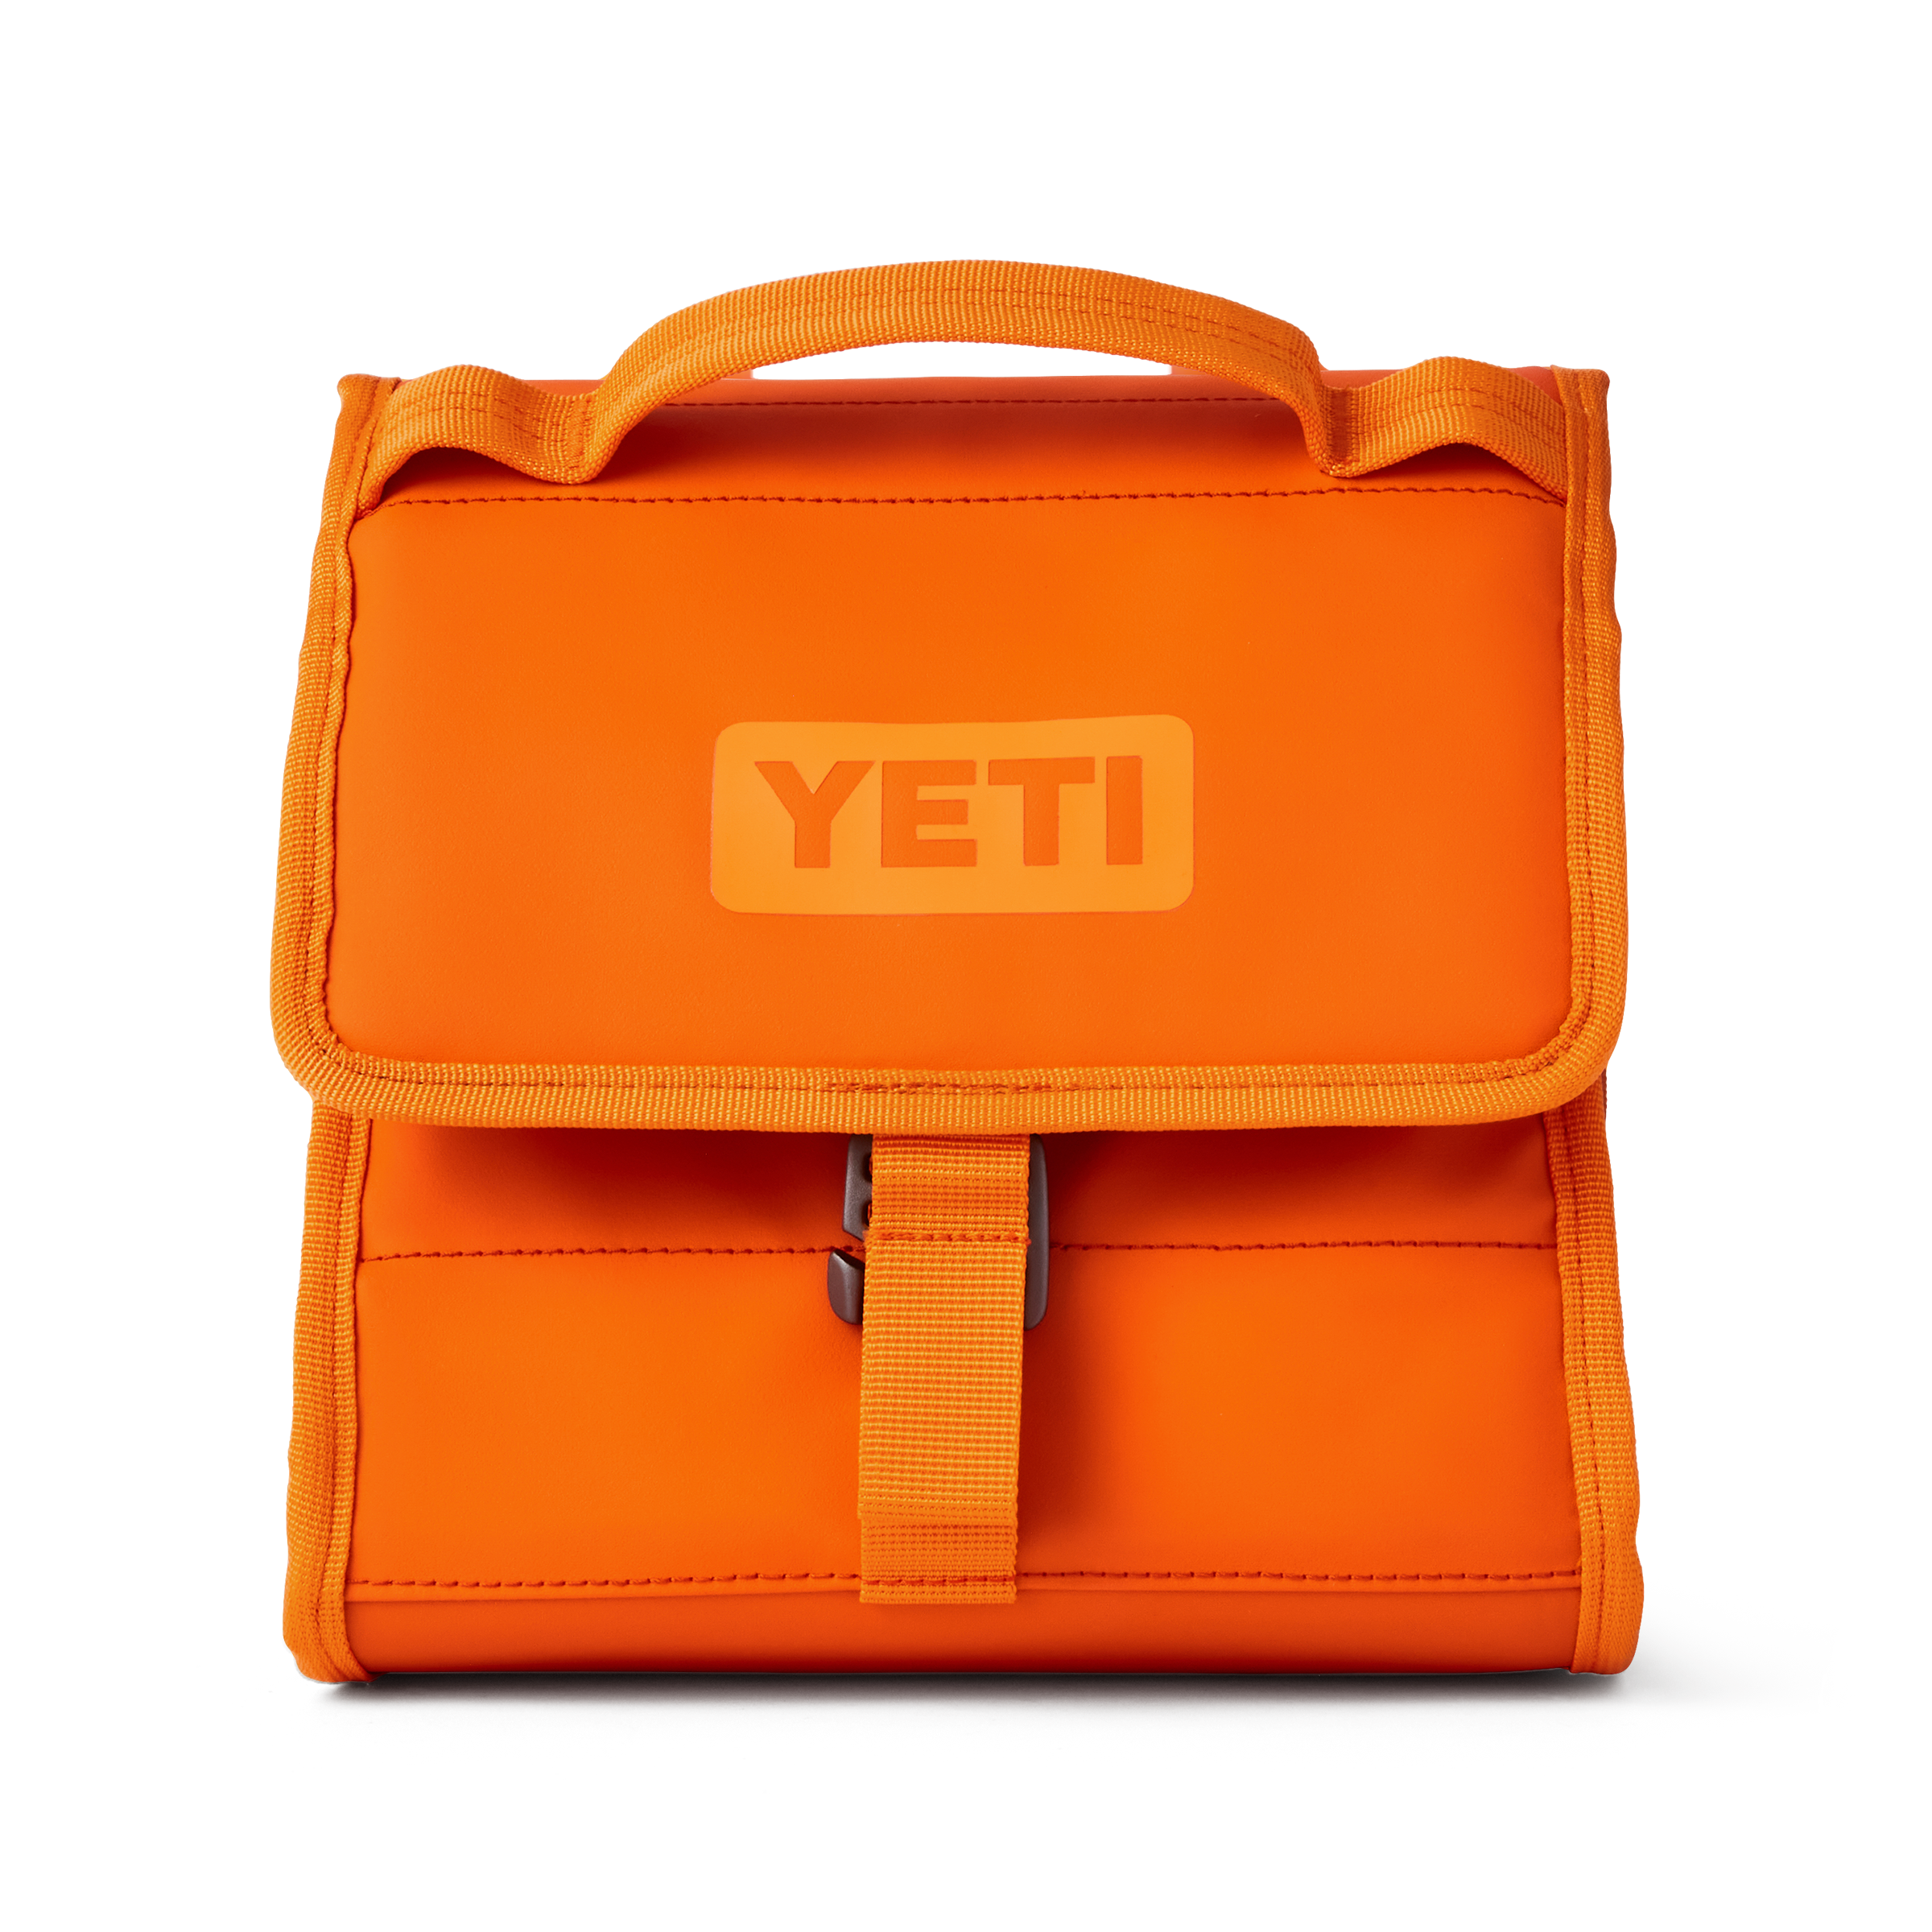 Yeti Daytrip Lunch Bag - KING CRAB ORANGE - Mansfield Hunting & Fishing - Products to prepare for Corona Virus